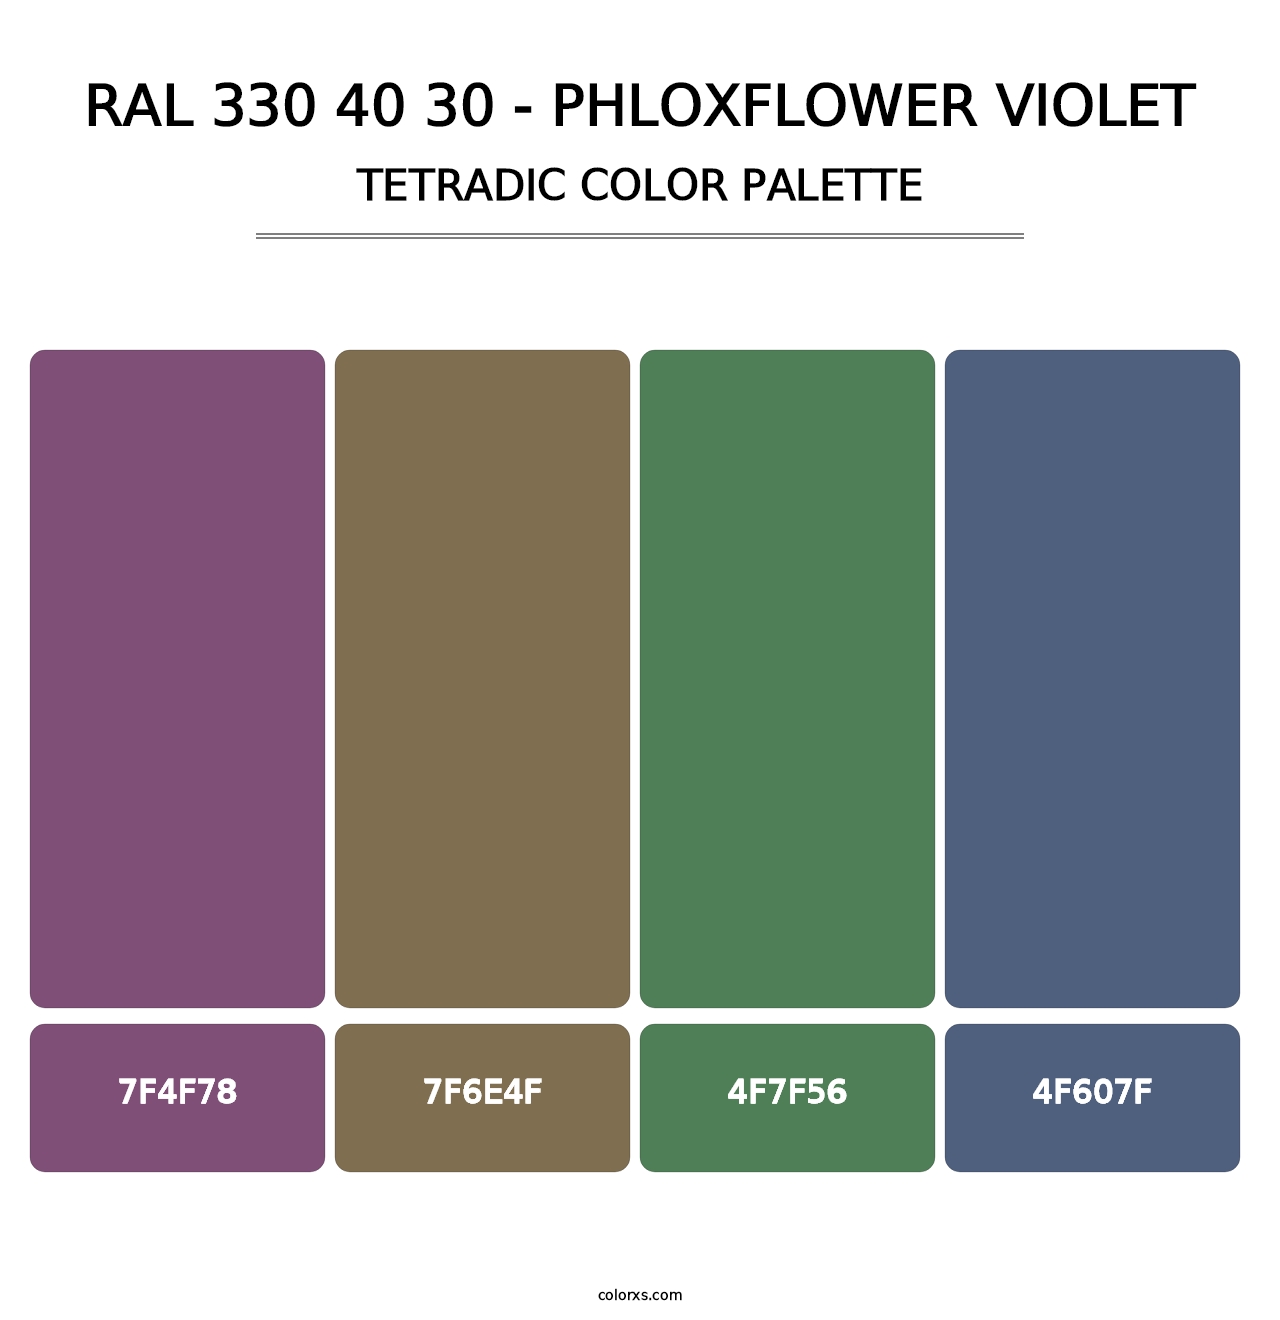 RAL 330 40 30 - Phloxflower Violet - Tetradic Color Palette